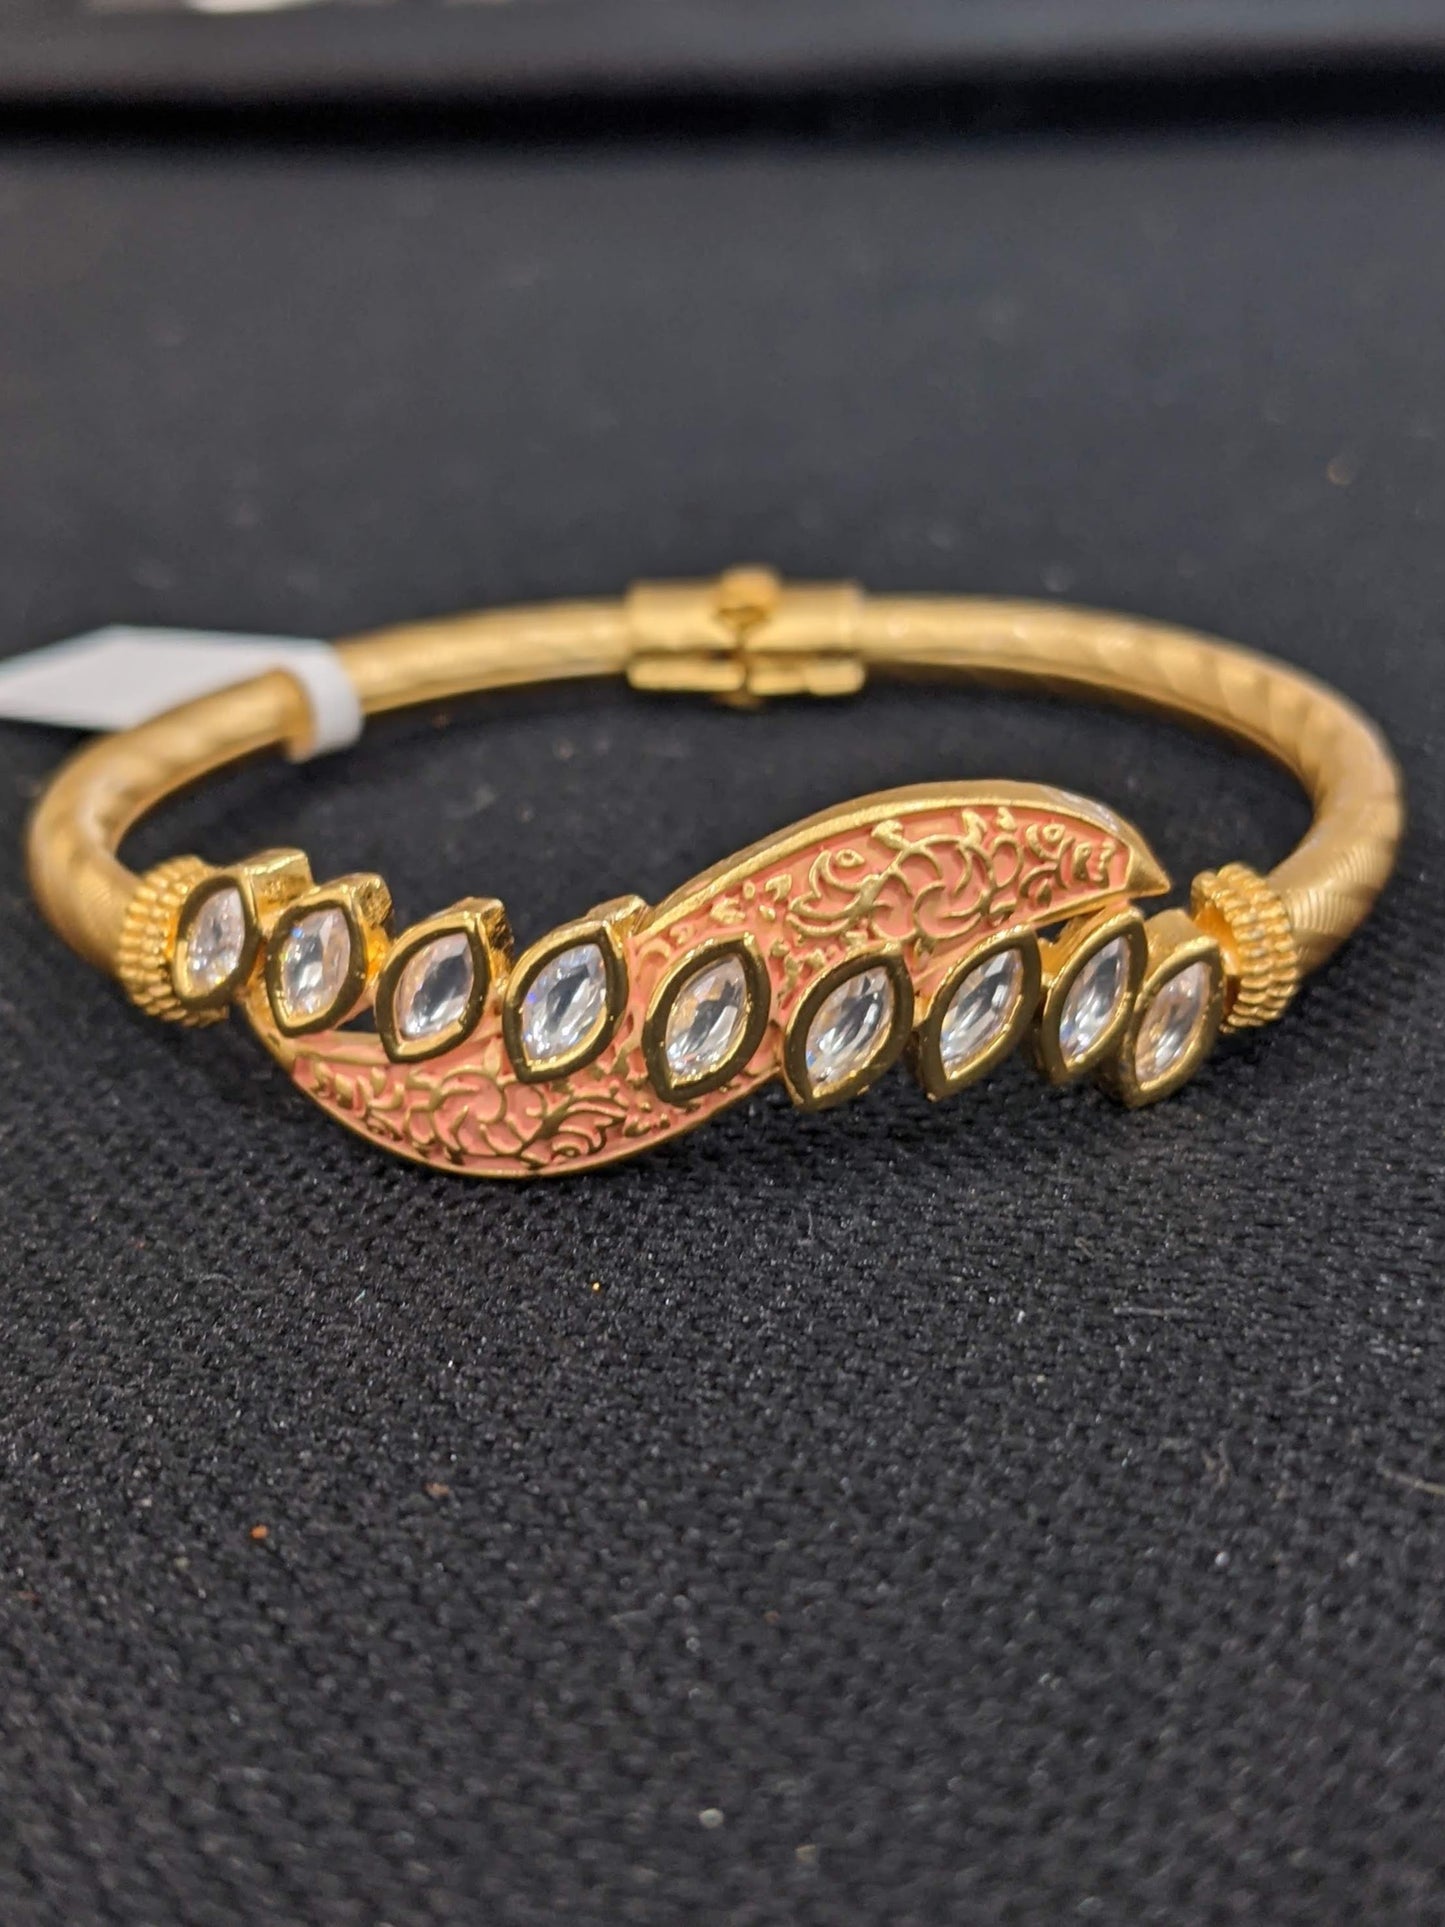 S Swirl design uncut kundan stone openable bangle bracelet